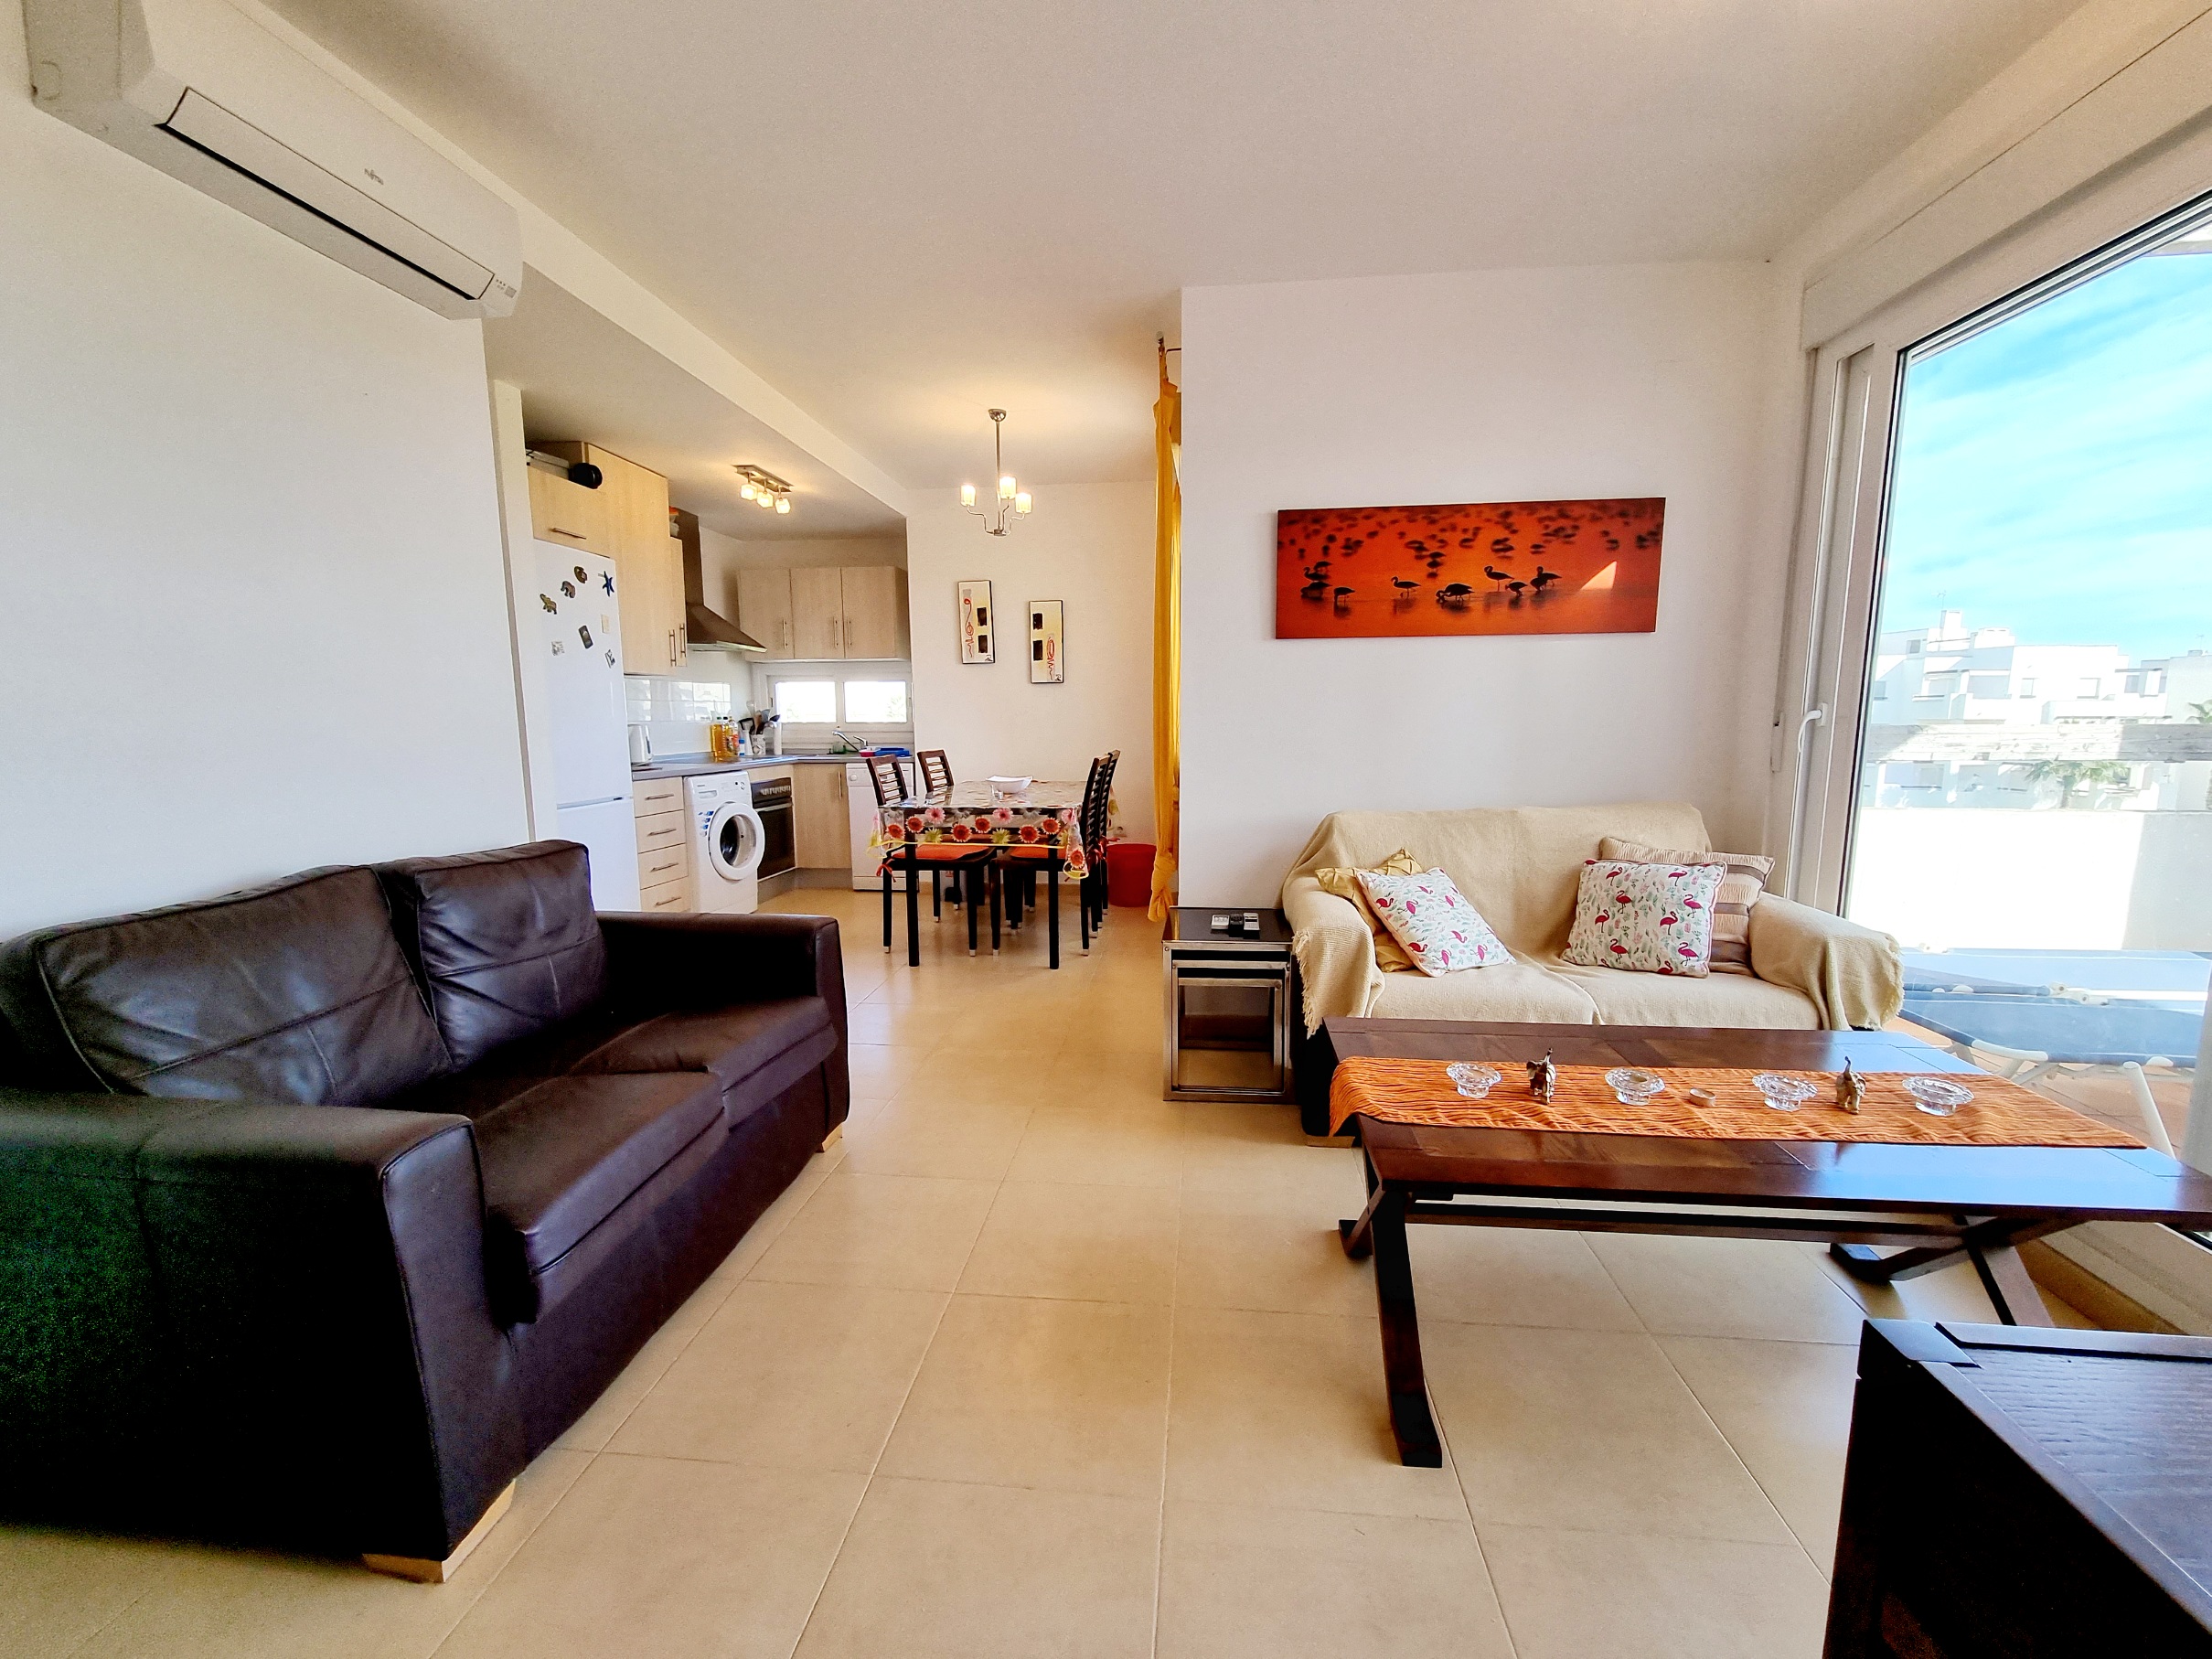 3 Bed 2 Bath Penthouse Apartment For Sale Terrazas De La torre Golf Resort Murcia